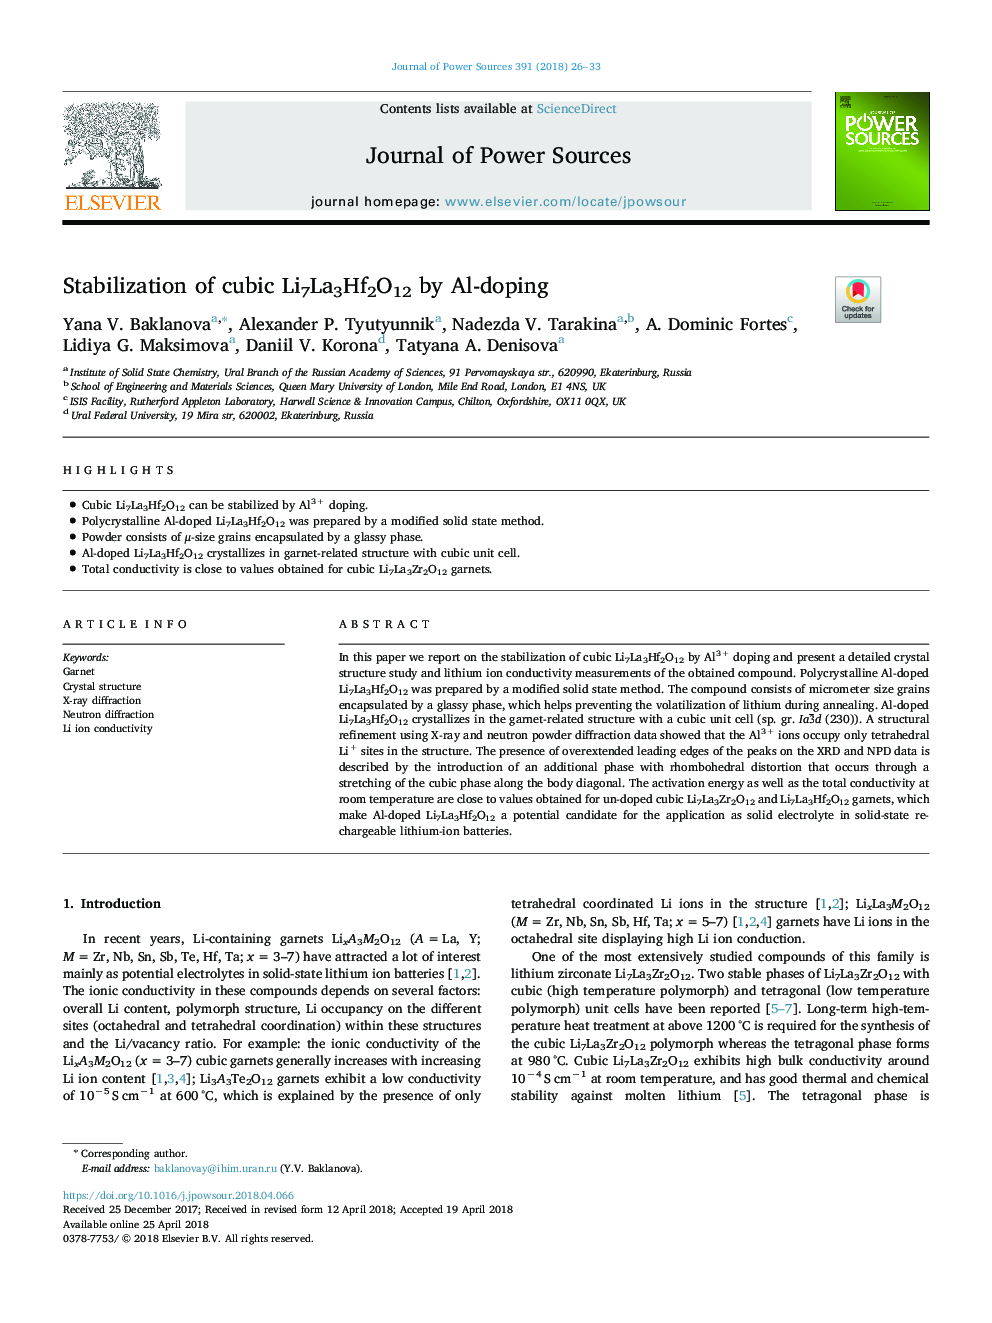 Stabilization of cubic Li7La3Hf2O12 by Al-doping